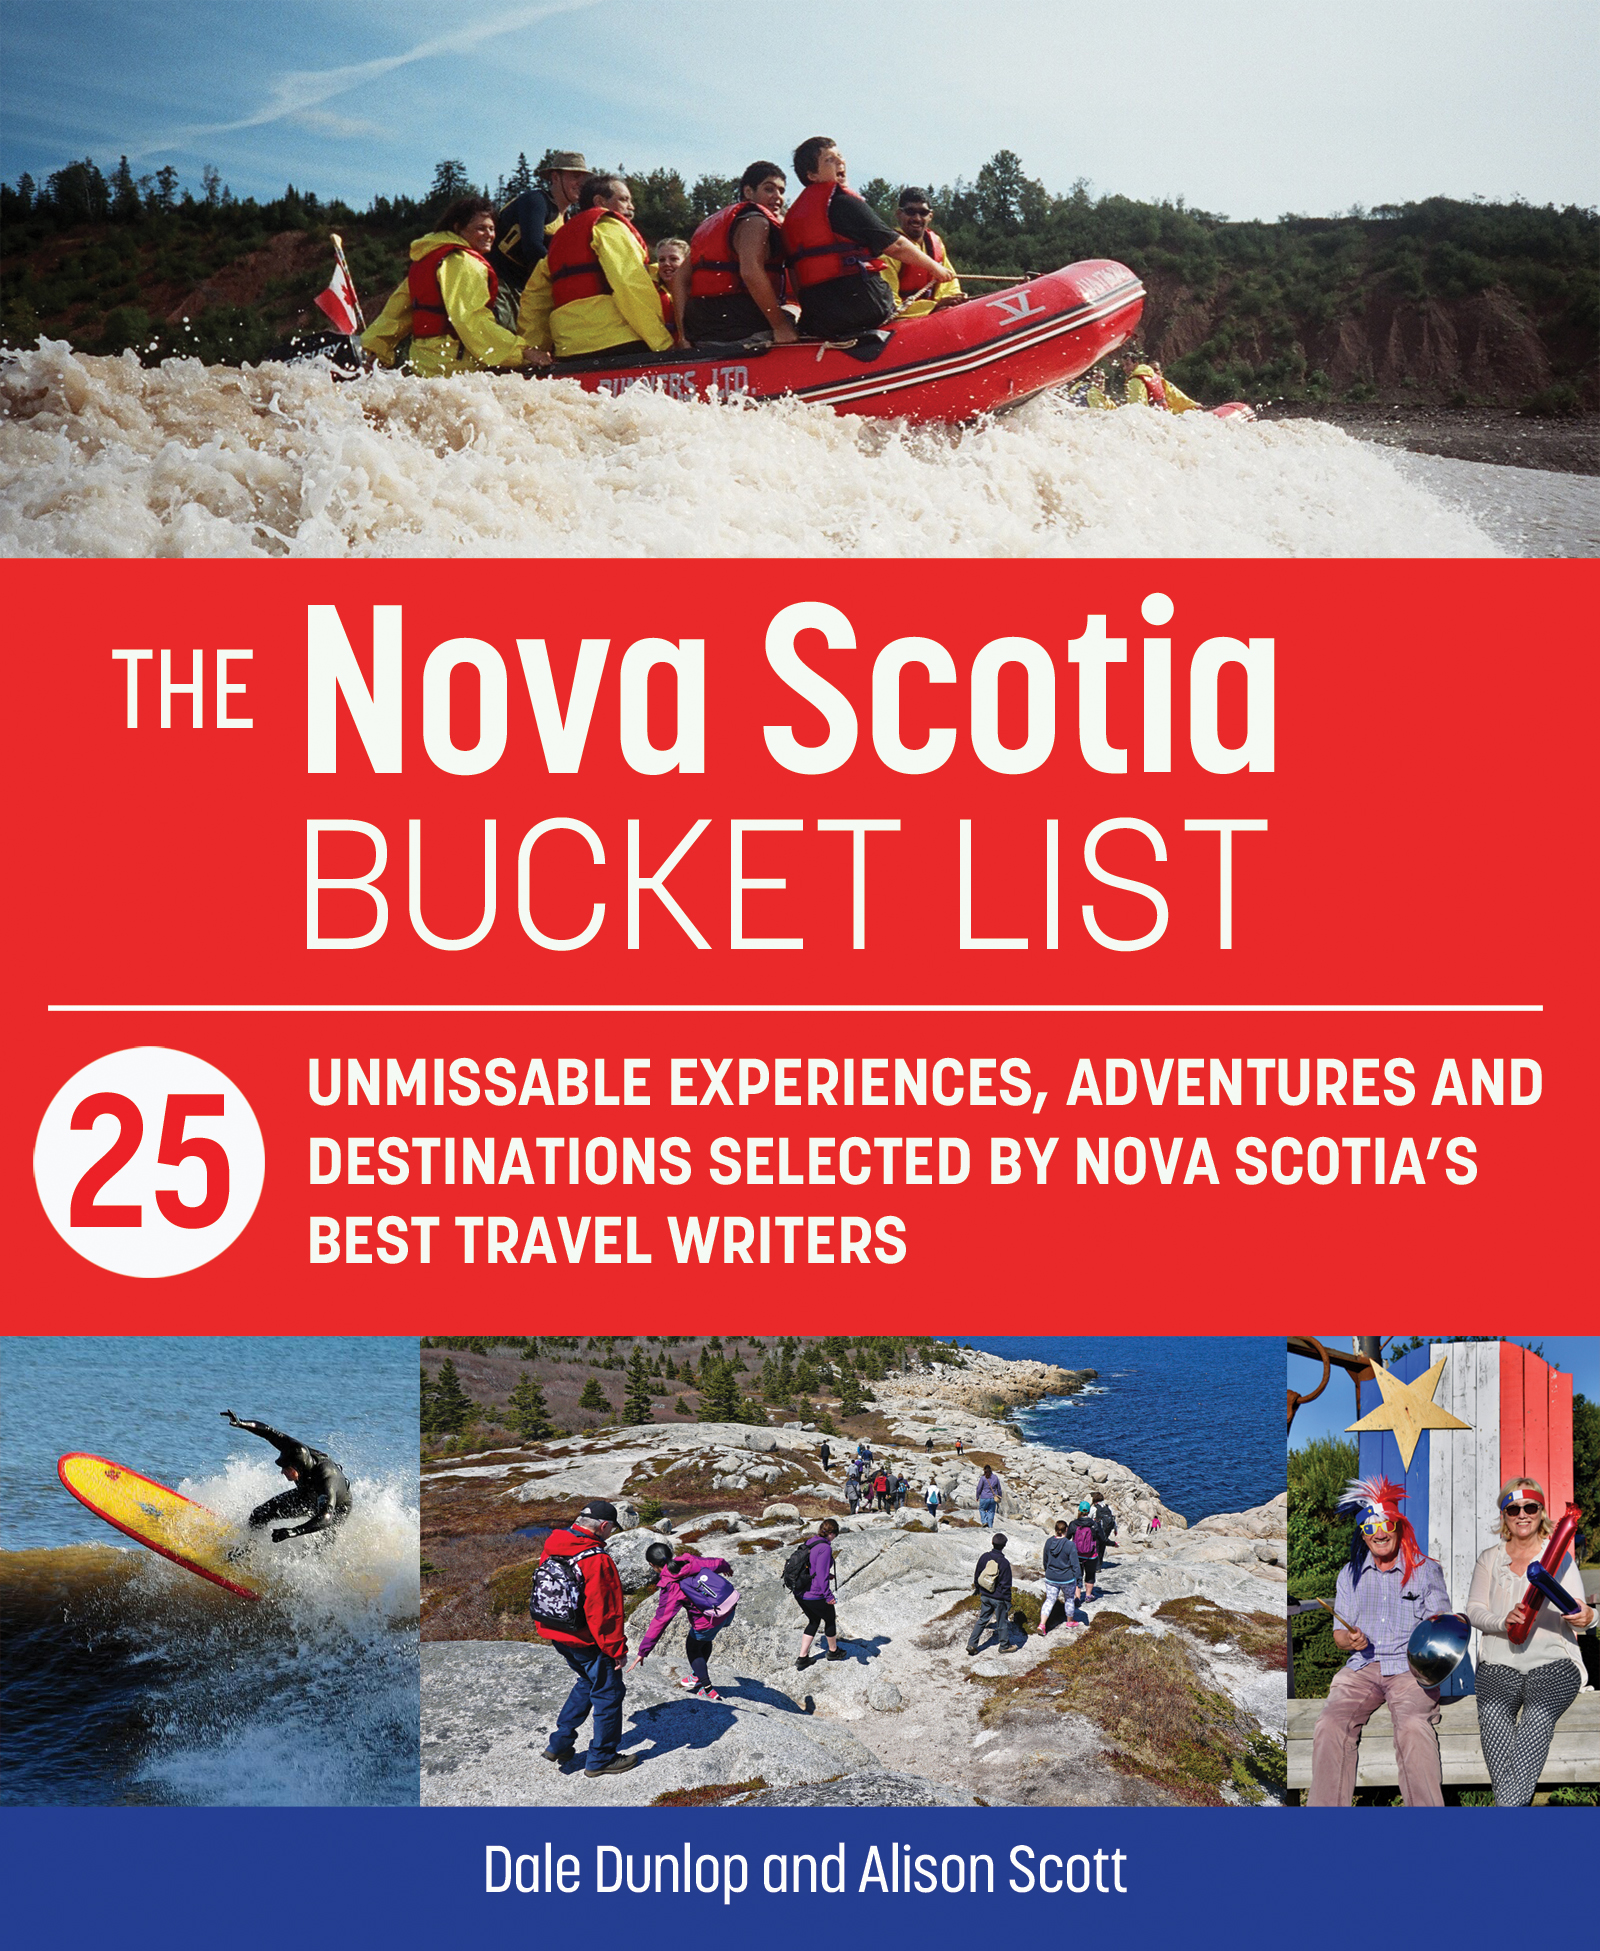 The Nova Scotia Bucket List